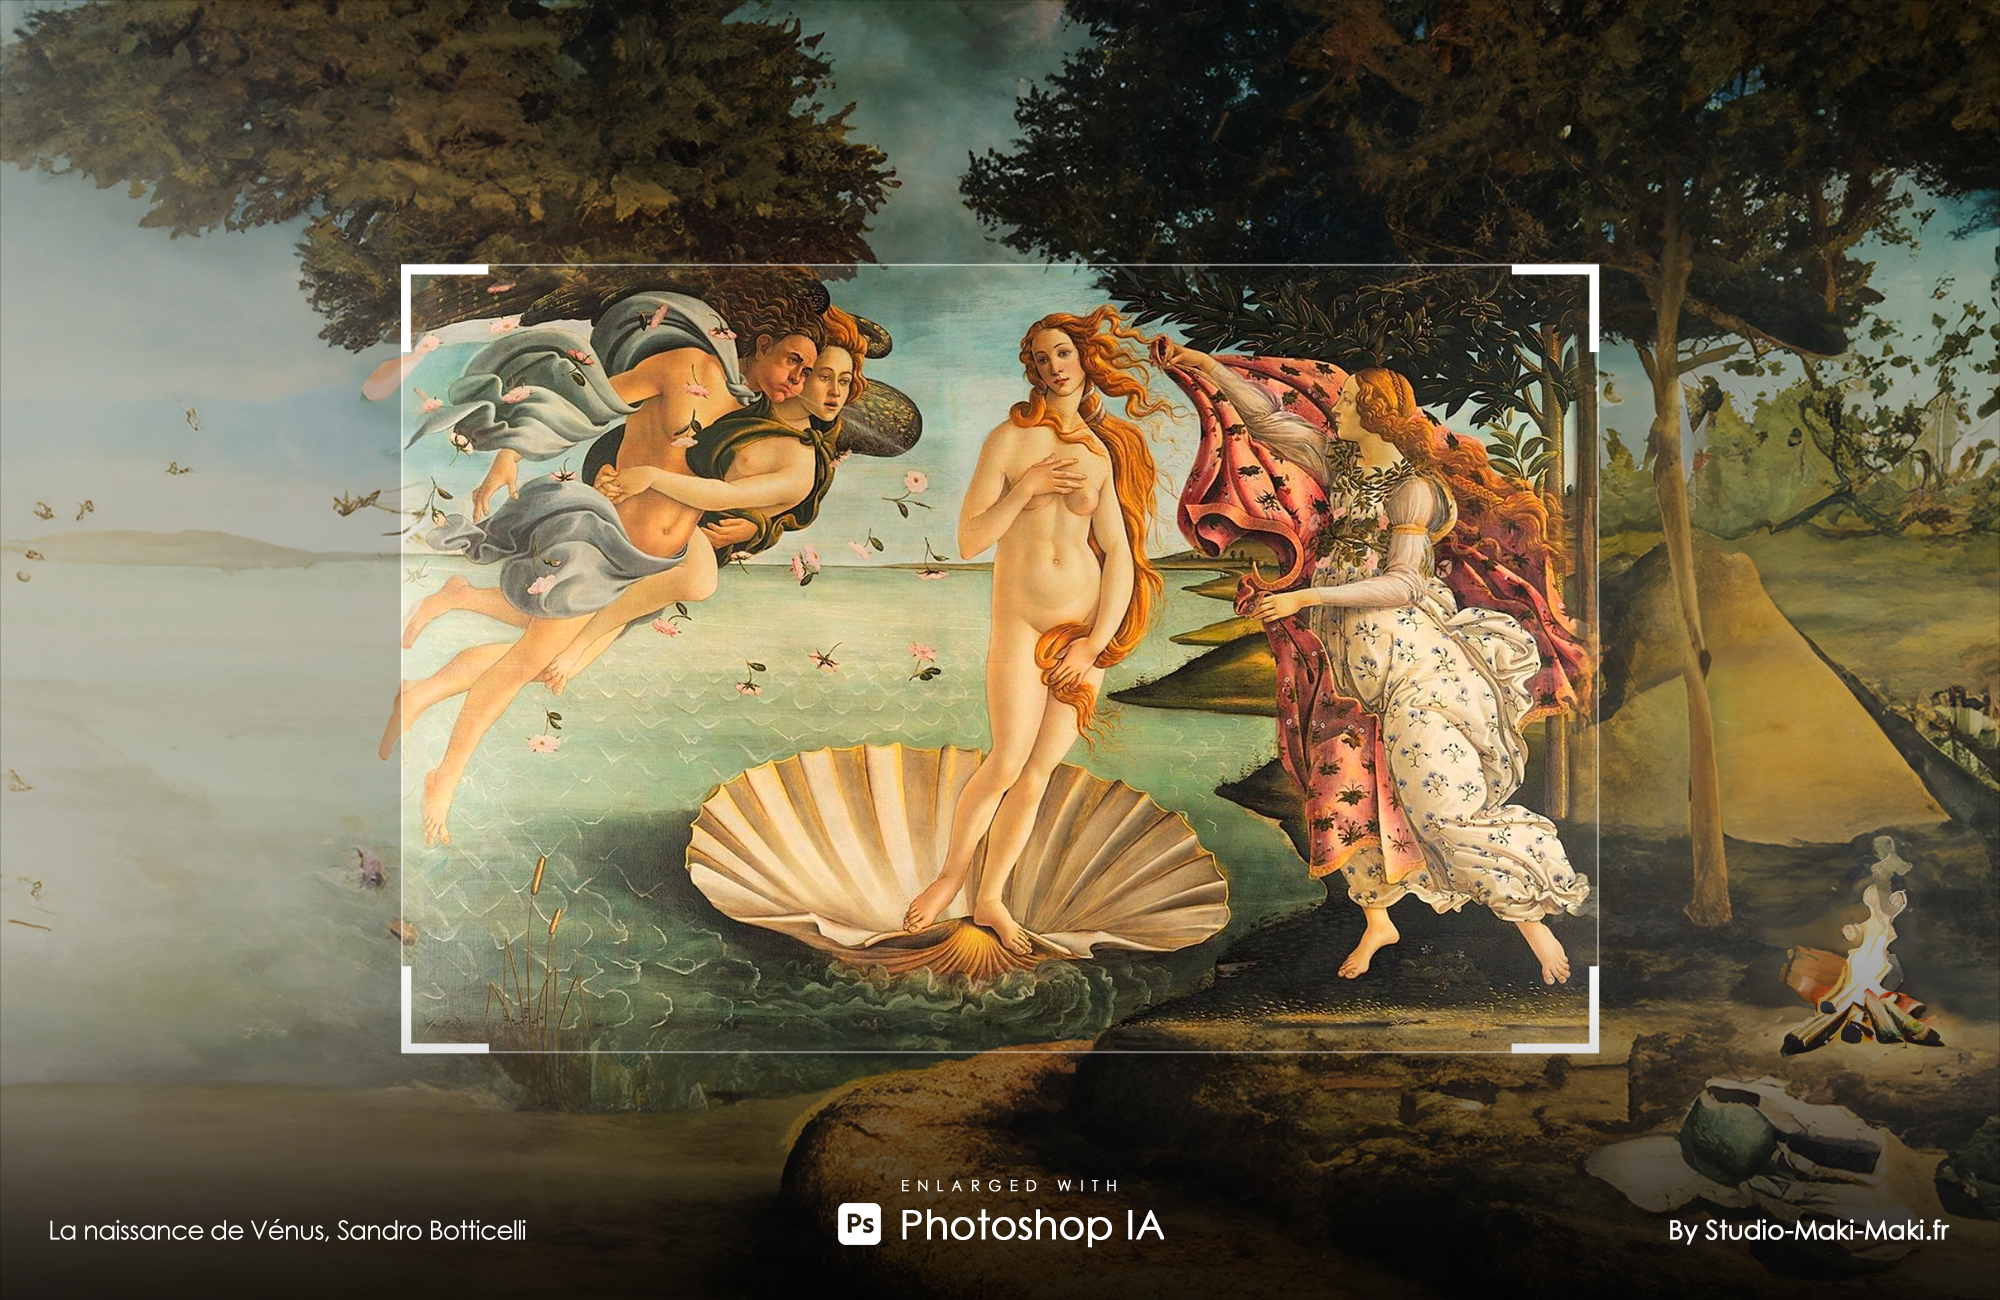 La naissance de Vénus, Sandro Botticelli - Enlarged with Photoshop IA - By Studio Maki Maki